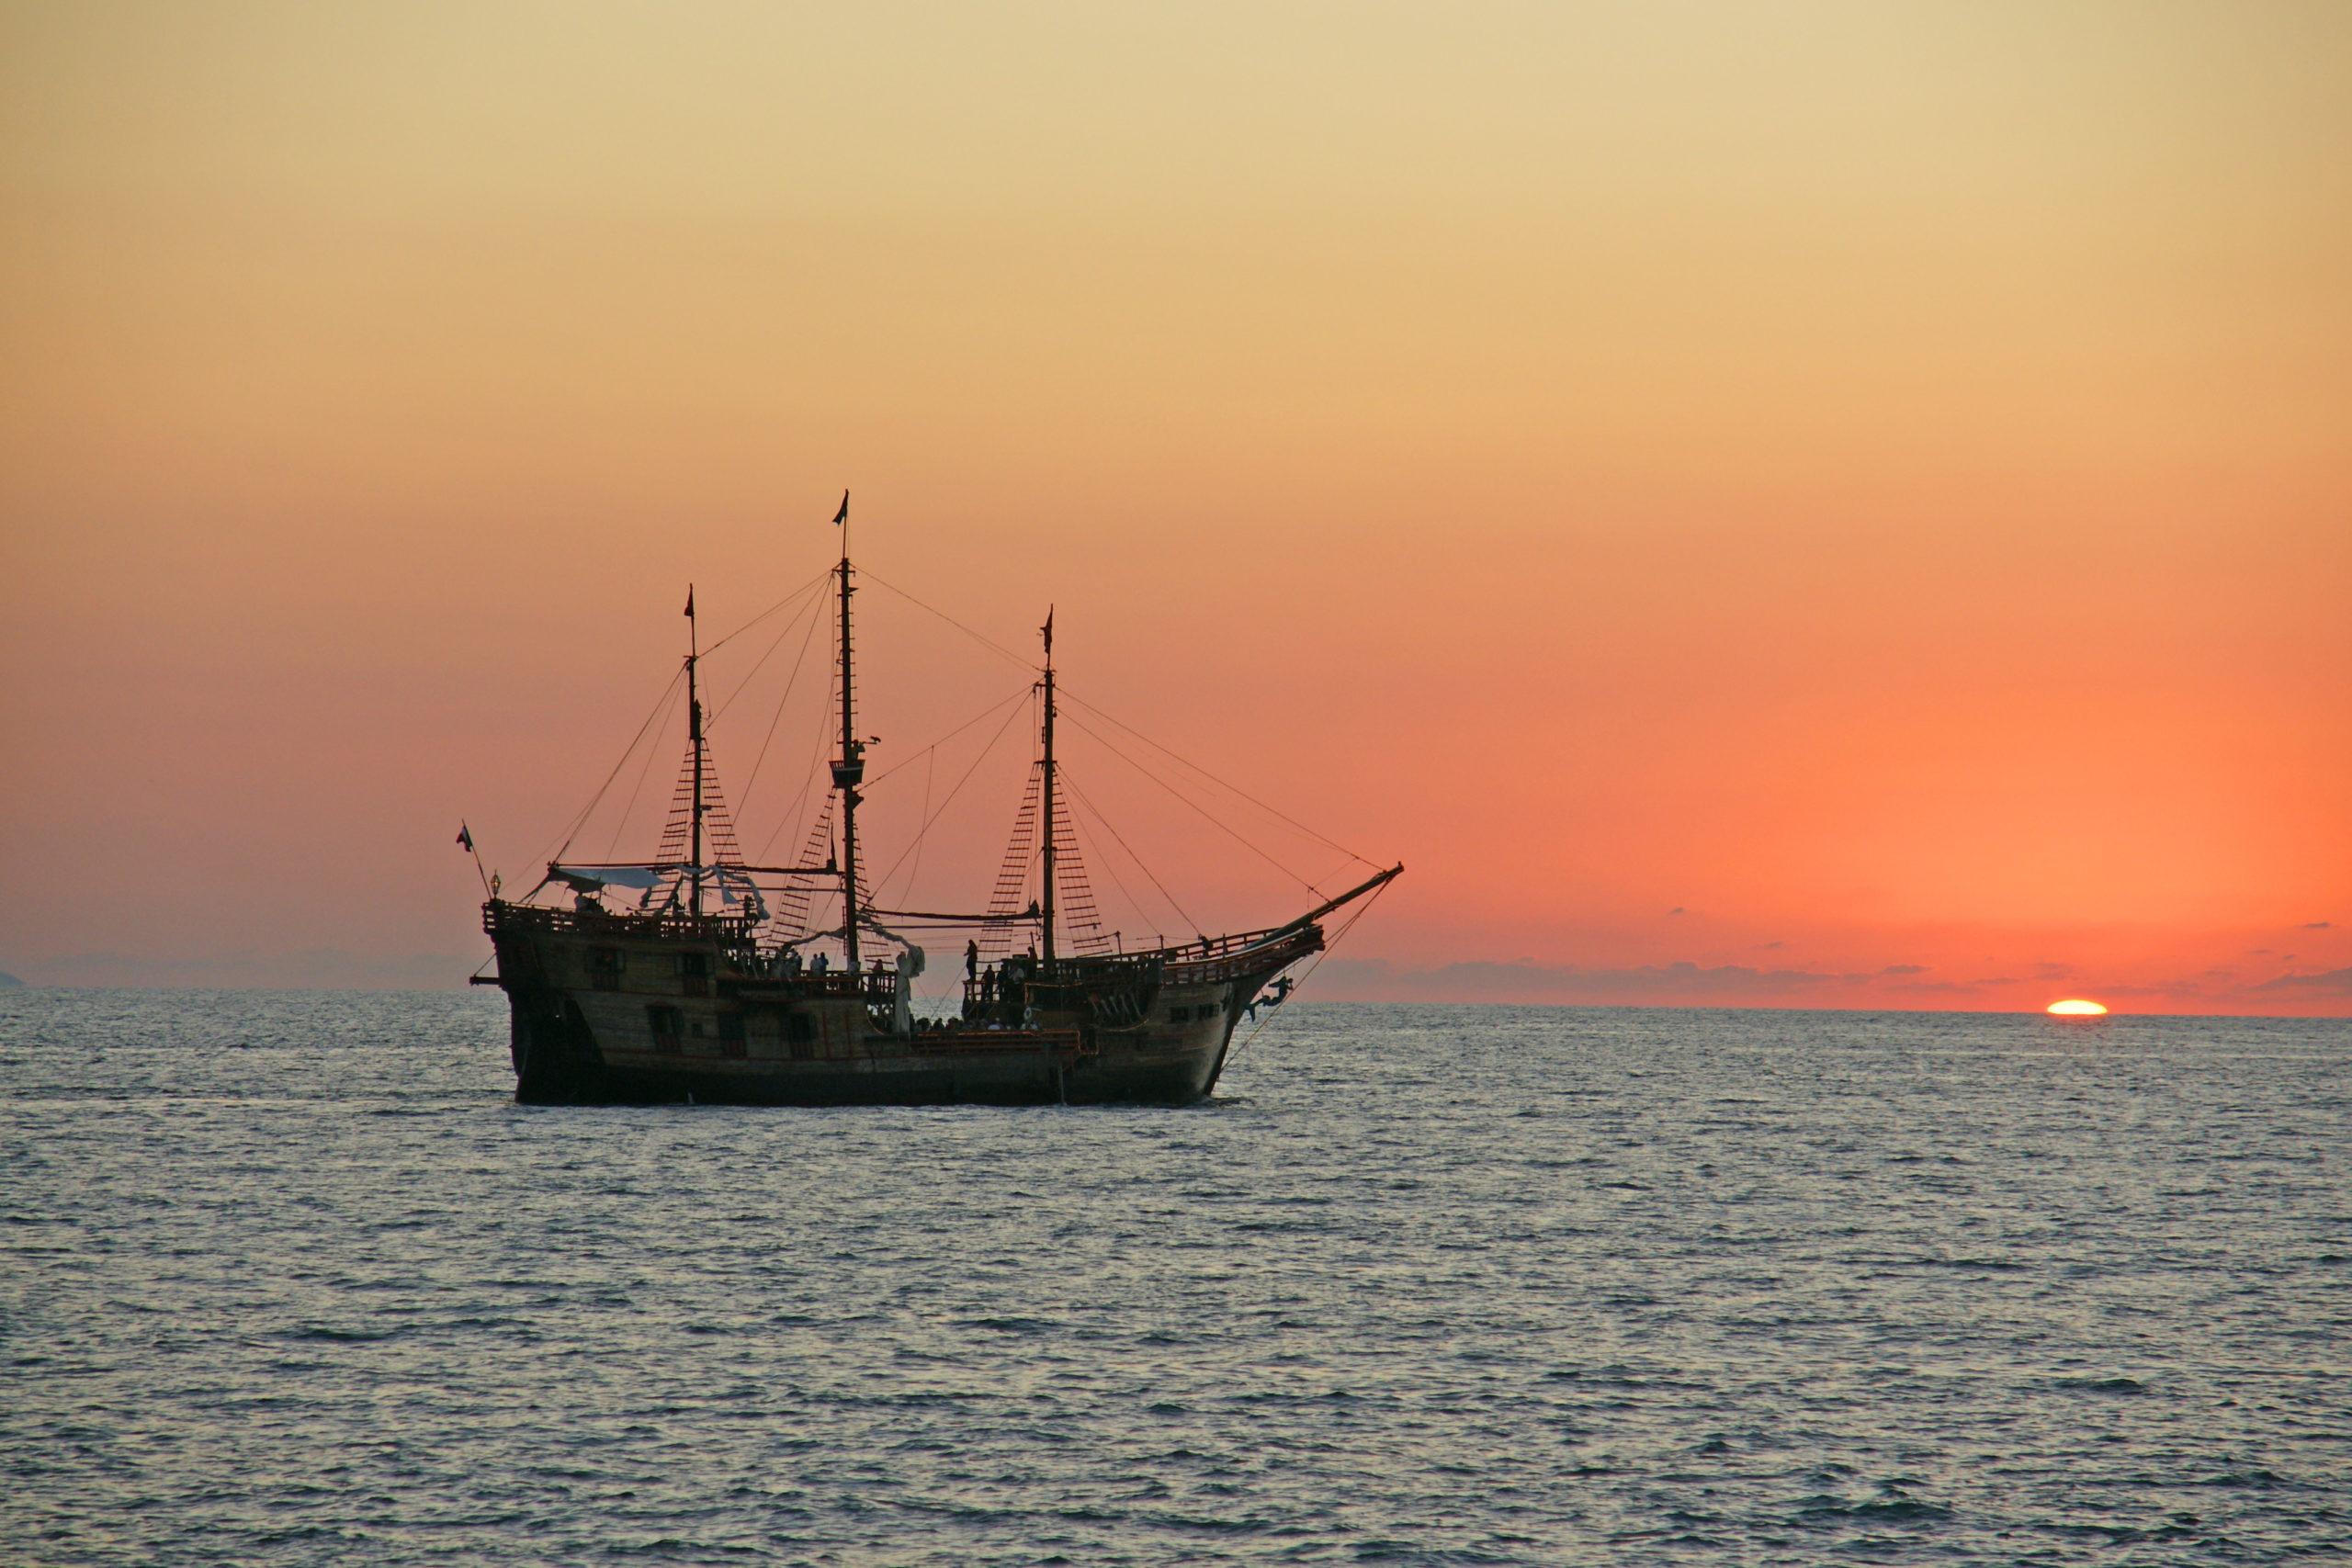 A pirate crew enjoys the sunset.